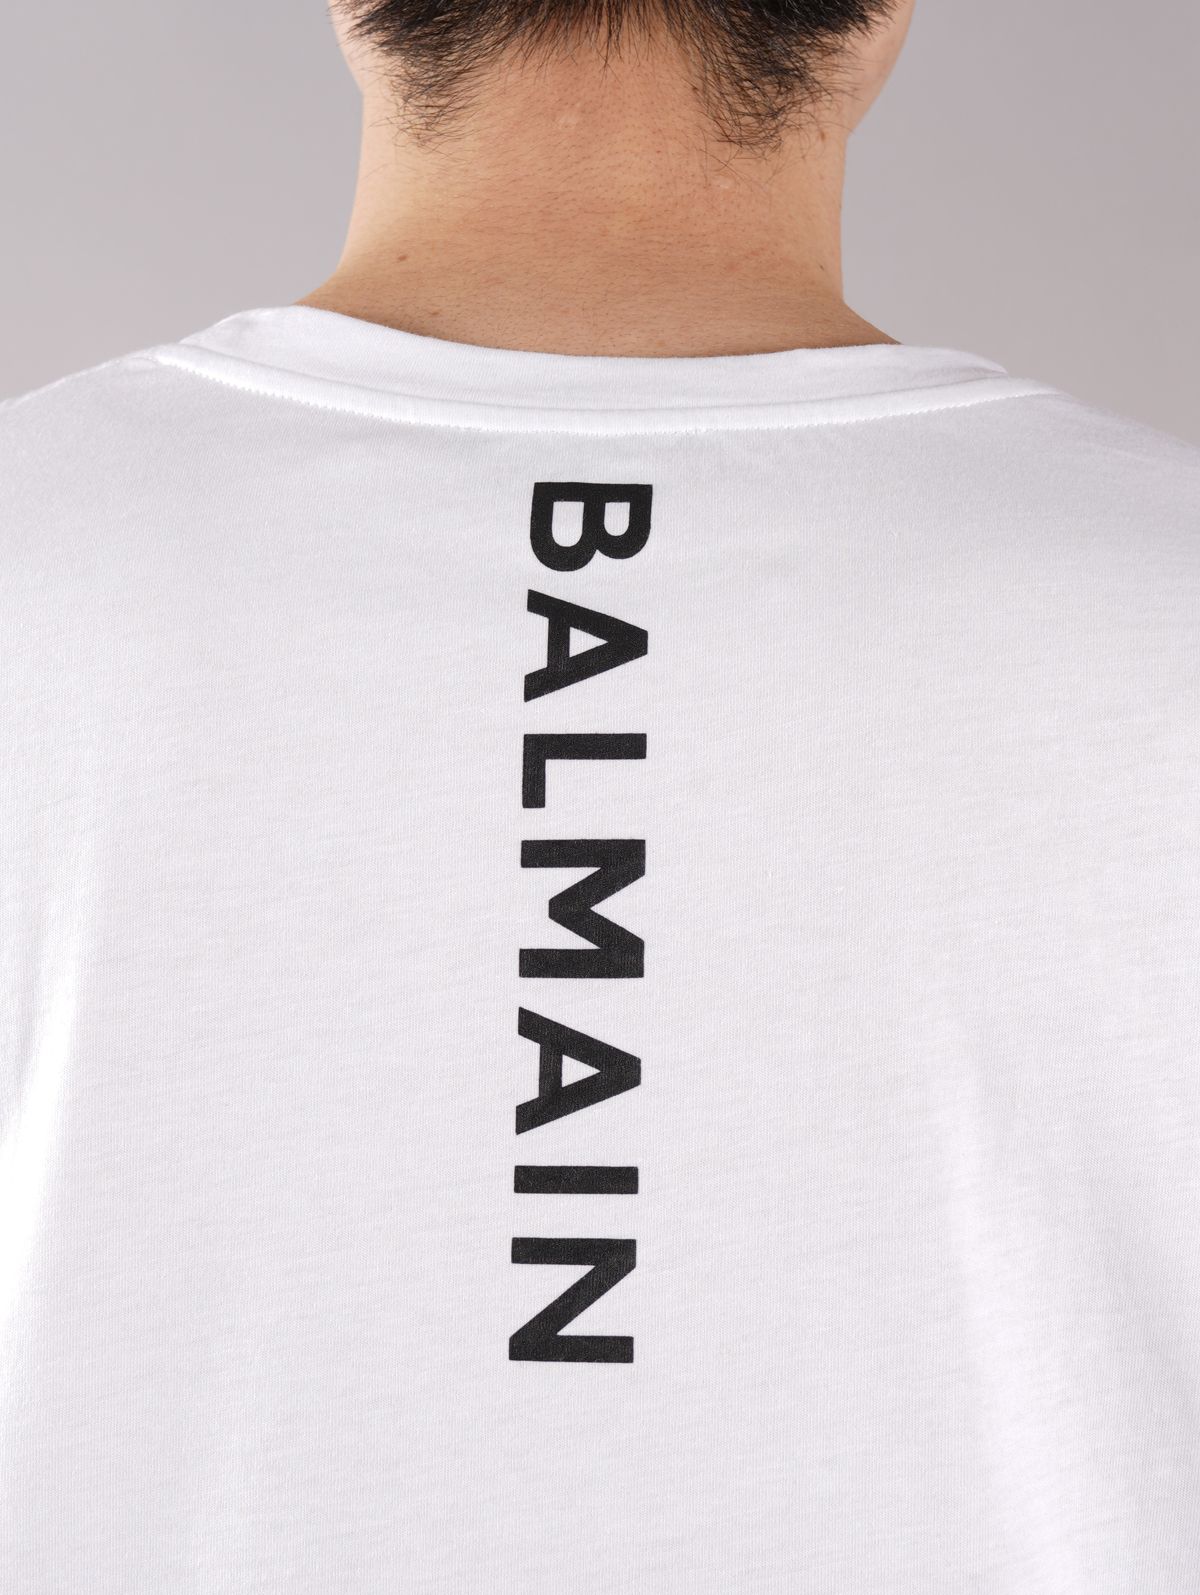 BALMAIN/ロゴTシャツ